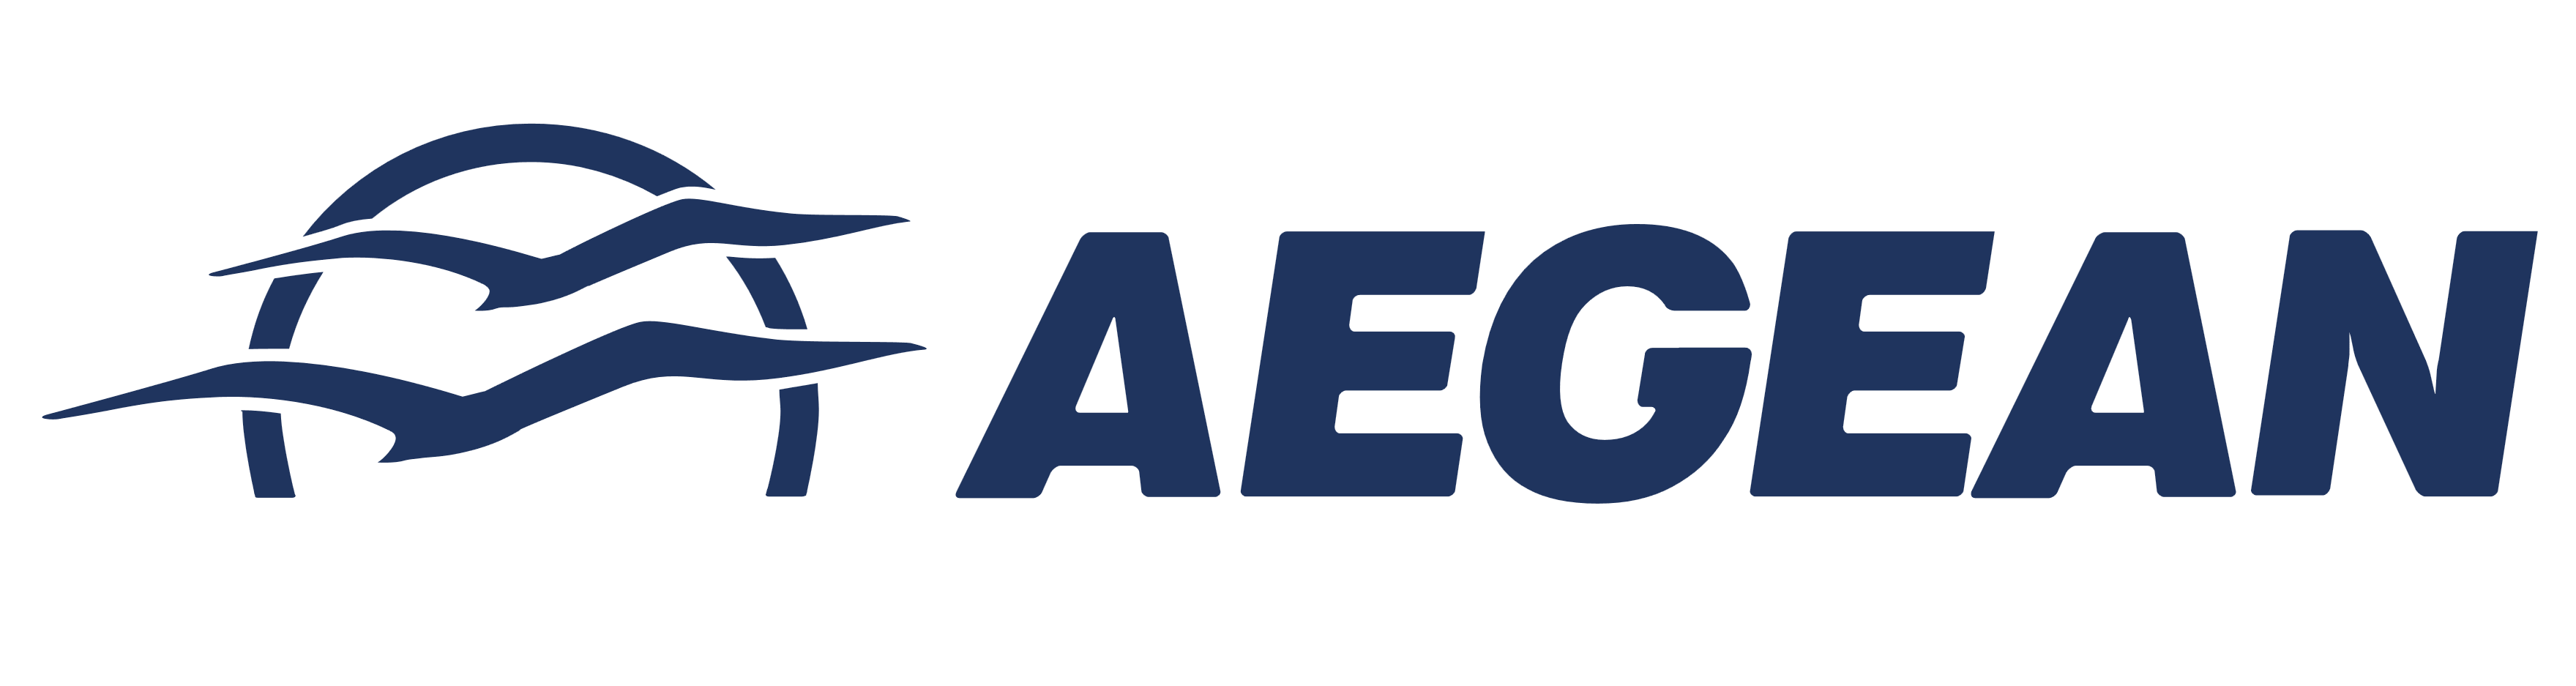 Aegean logo, logotype